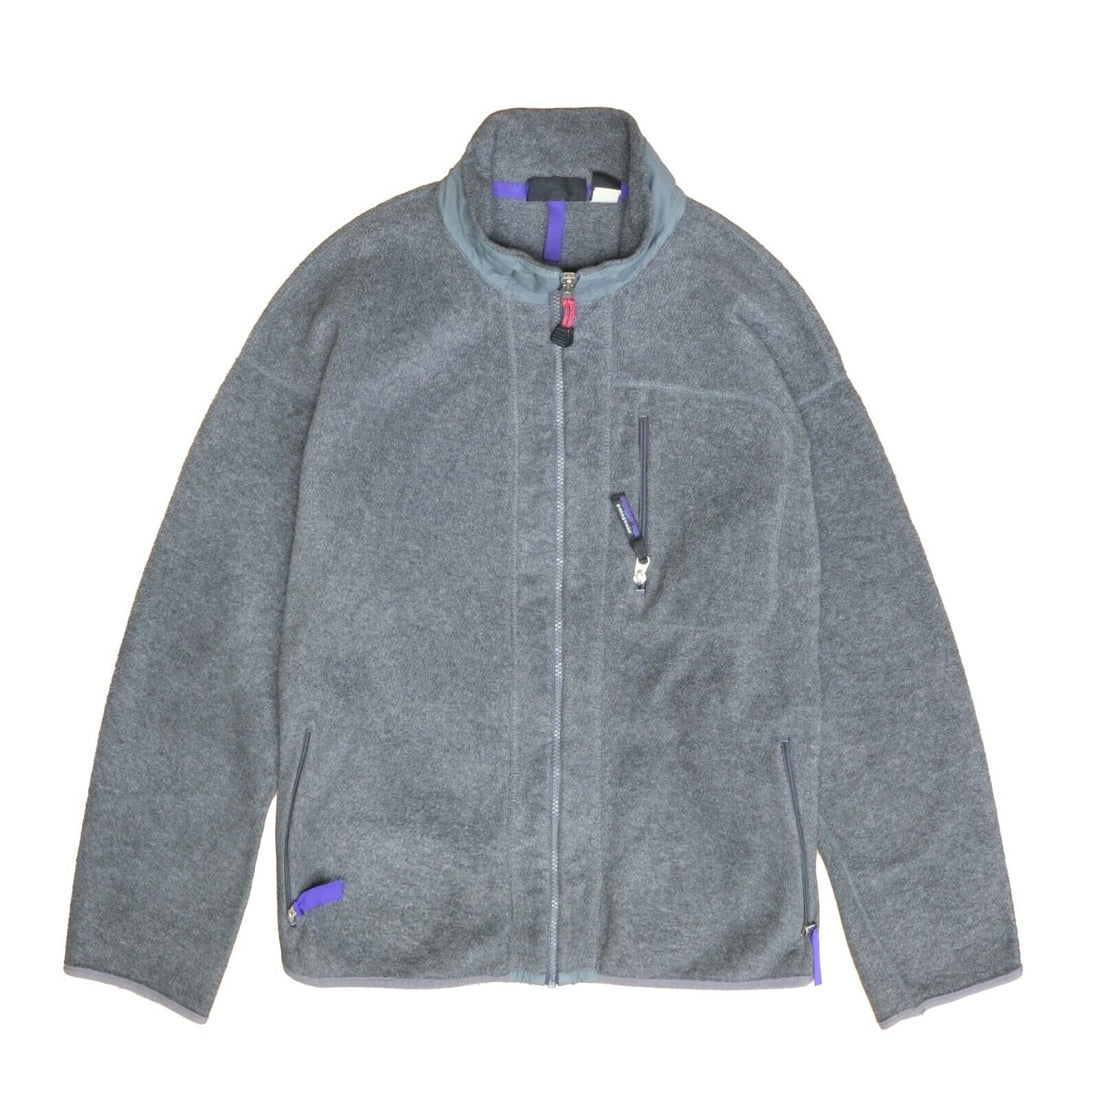 Vintage Patagonia Fleece Jacket Size Medium Gray Full Zip 90s